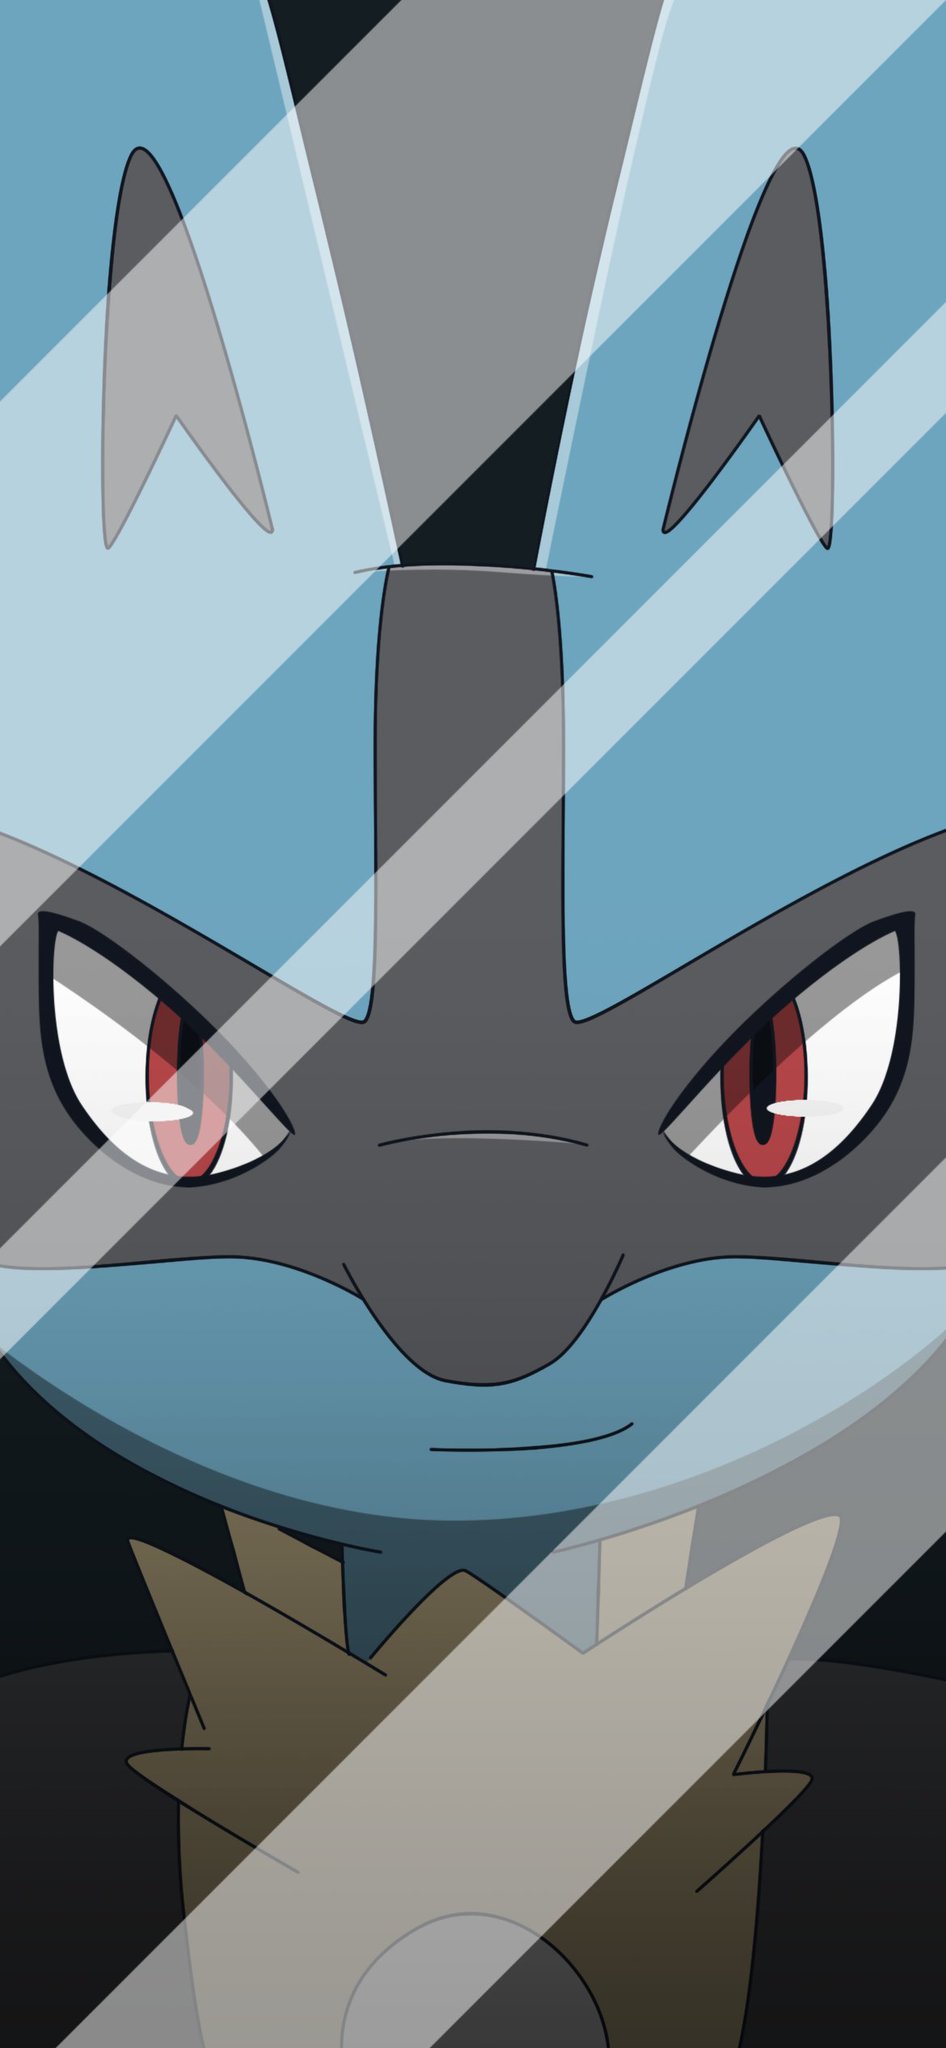 Bak on X: RT @All0412: Pokémon Mobile Wallpaper: Lucario #Shiny